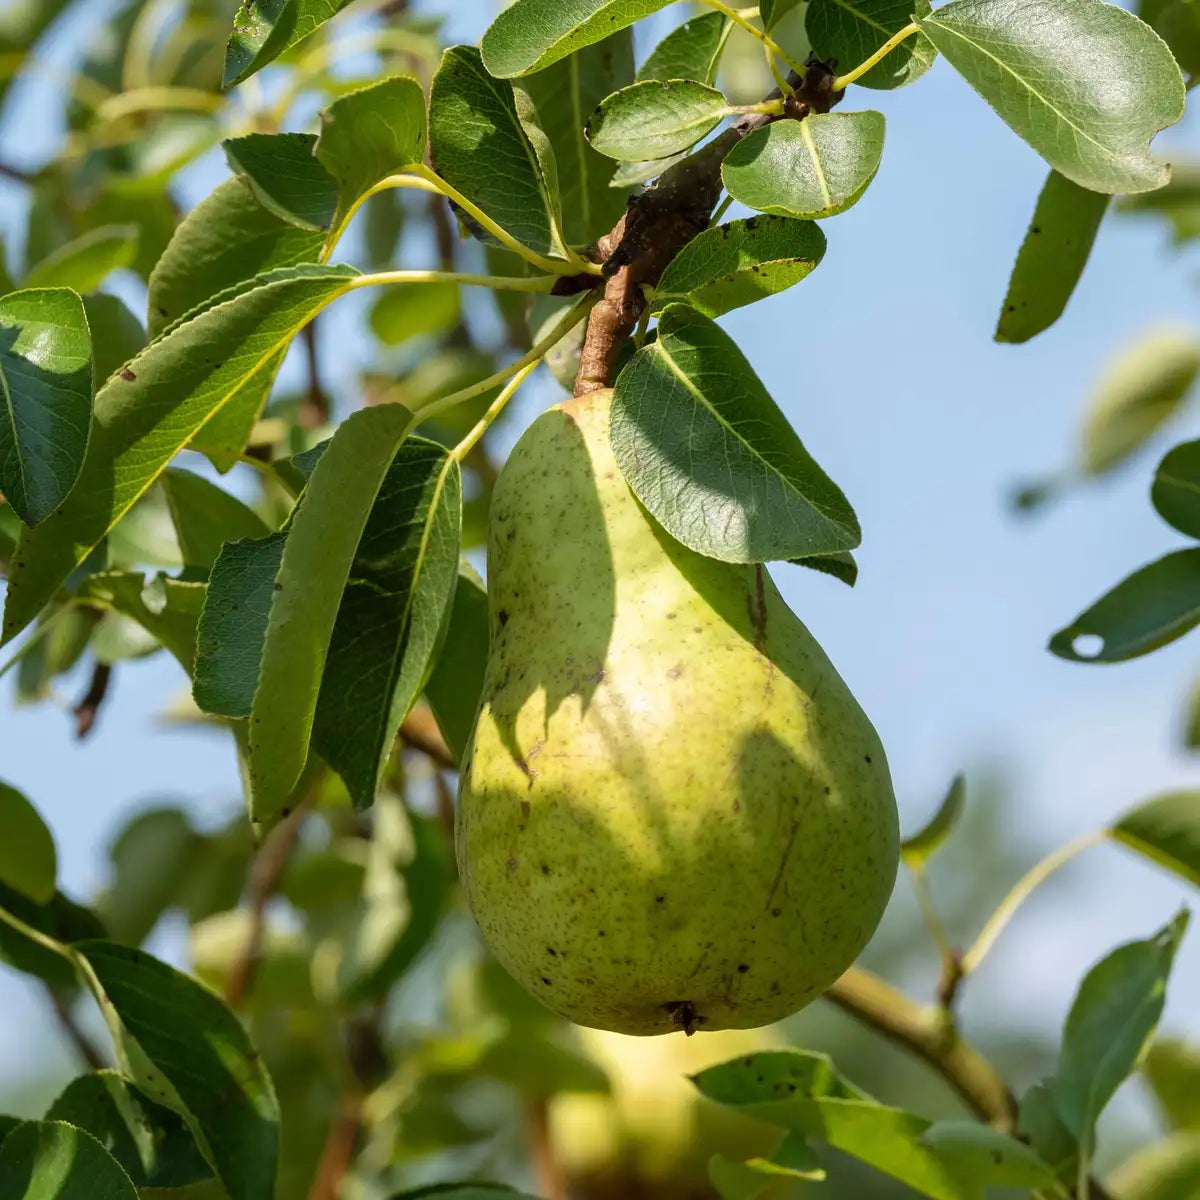 A ripe pear in a pear tree.